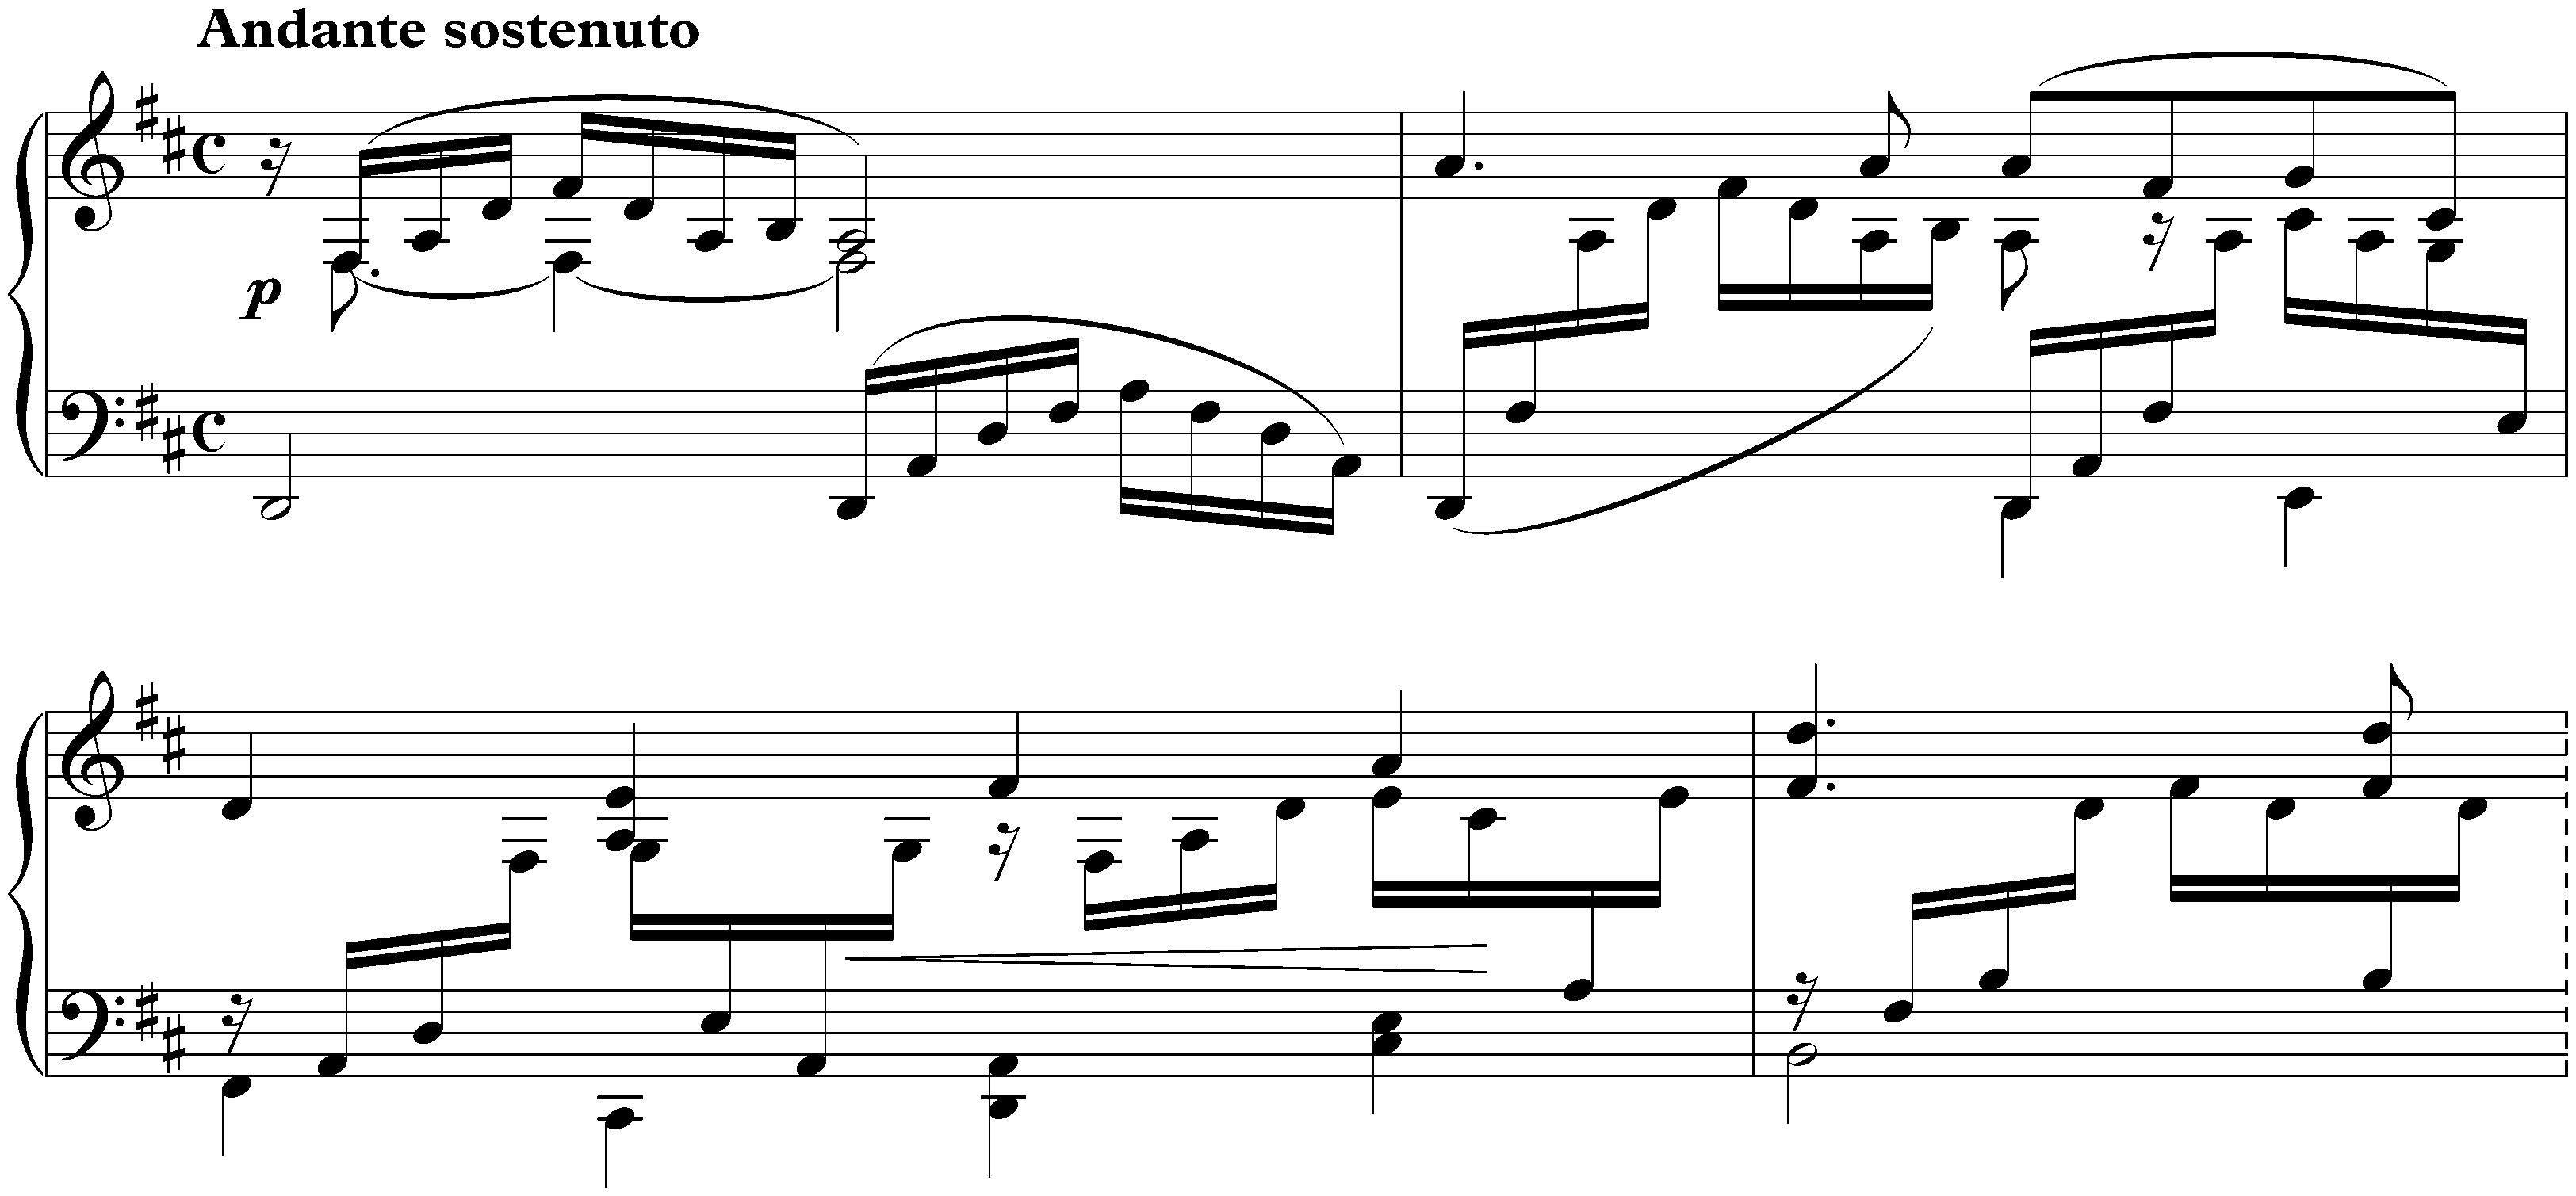 Lieder ohne Worte, Book 7, op. 85; 4. D major